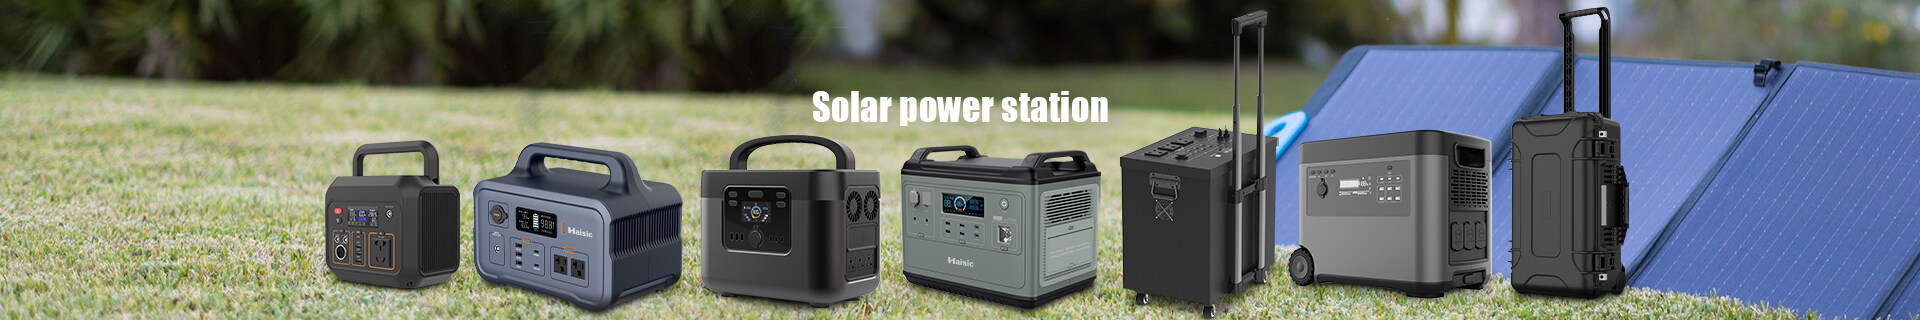 2000w portable power station, solar power station,